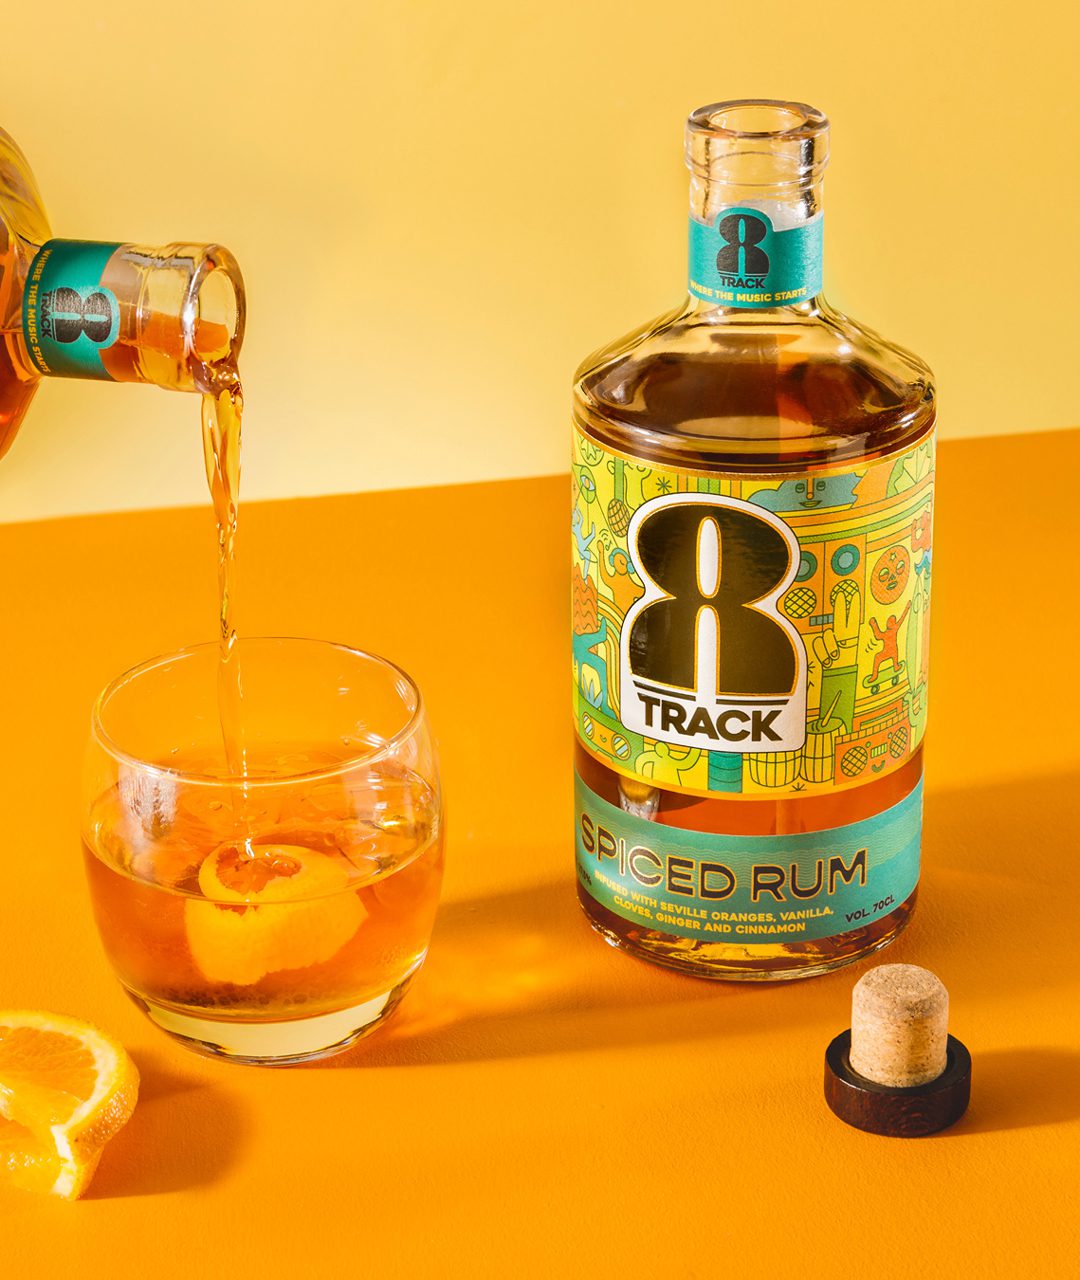 8Track Spiced Rum Branding